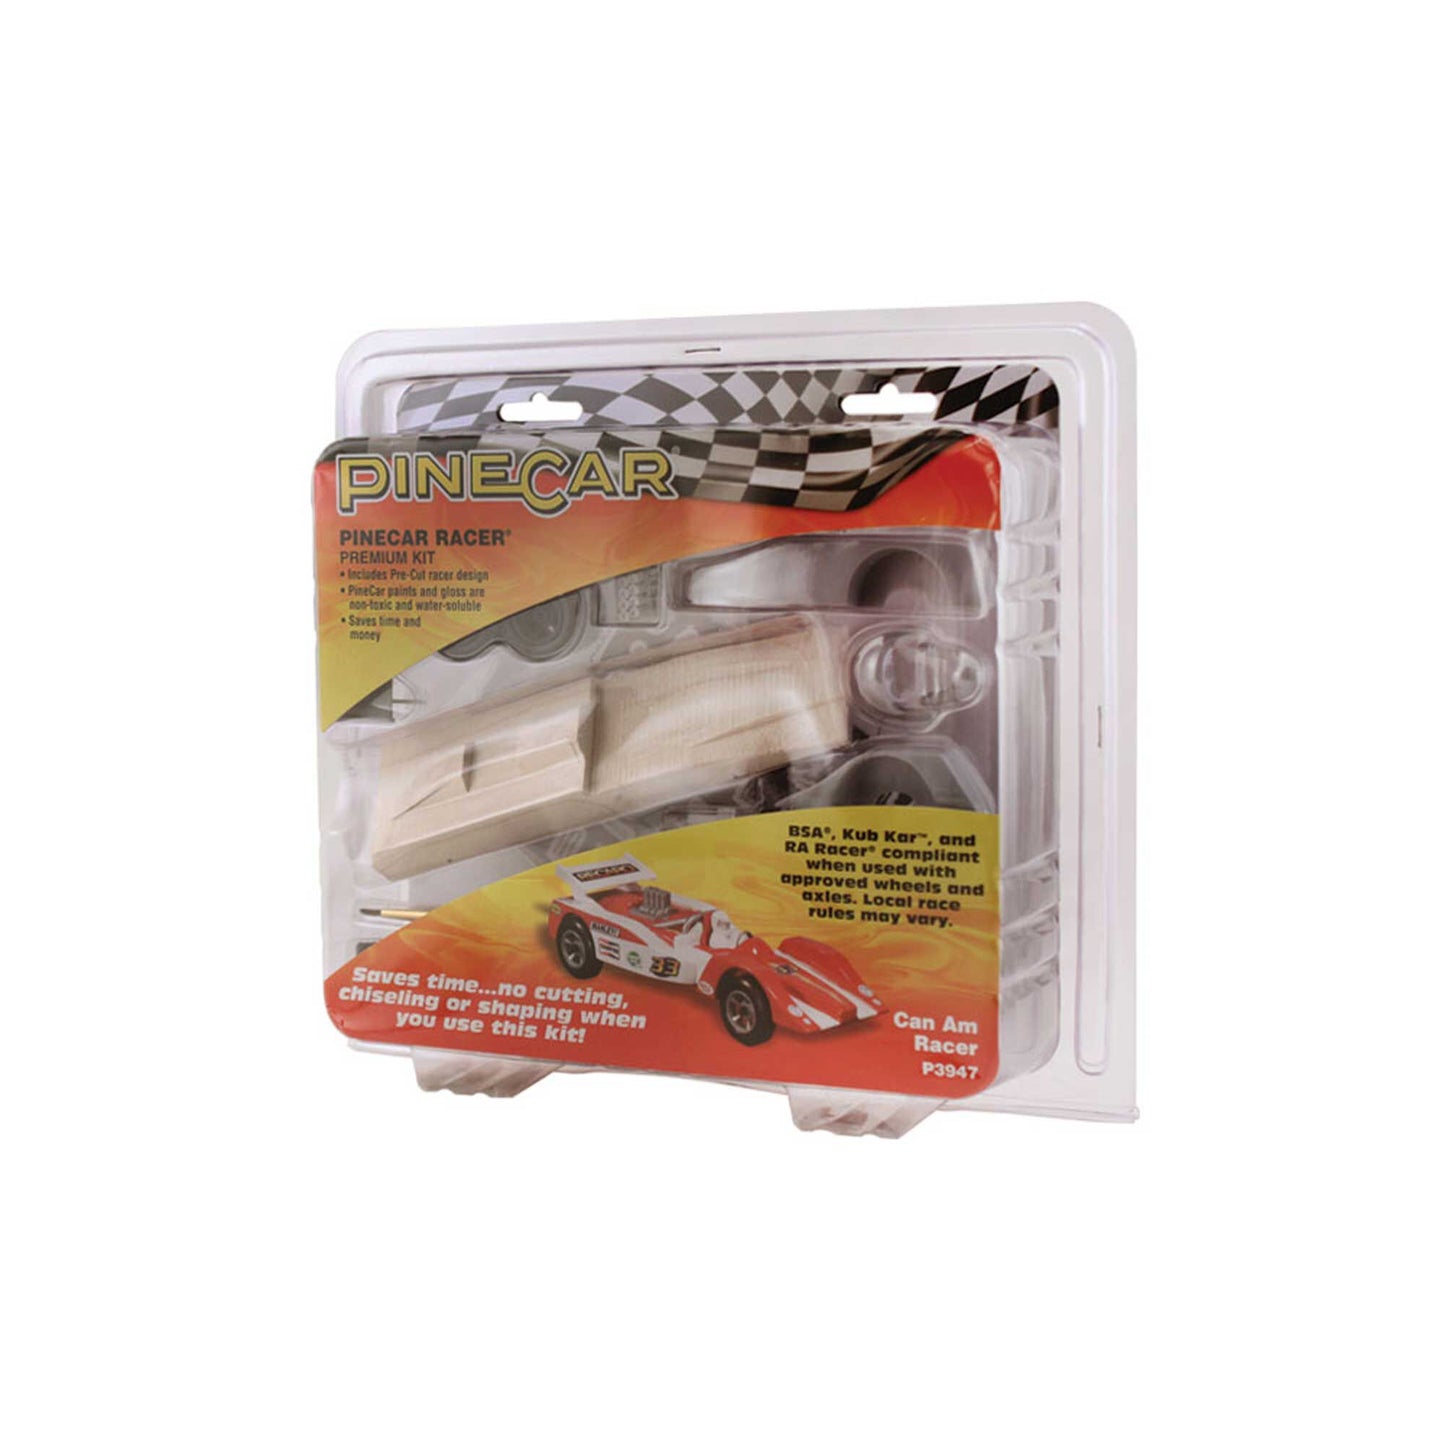 Premium PineCar Racer Kit, Can Am Racer